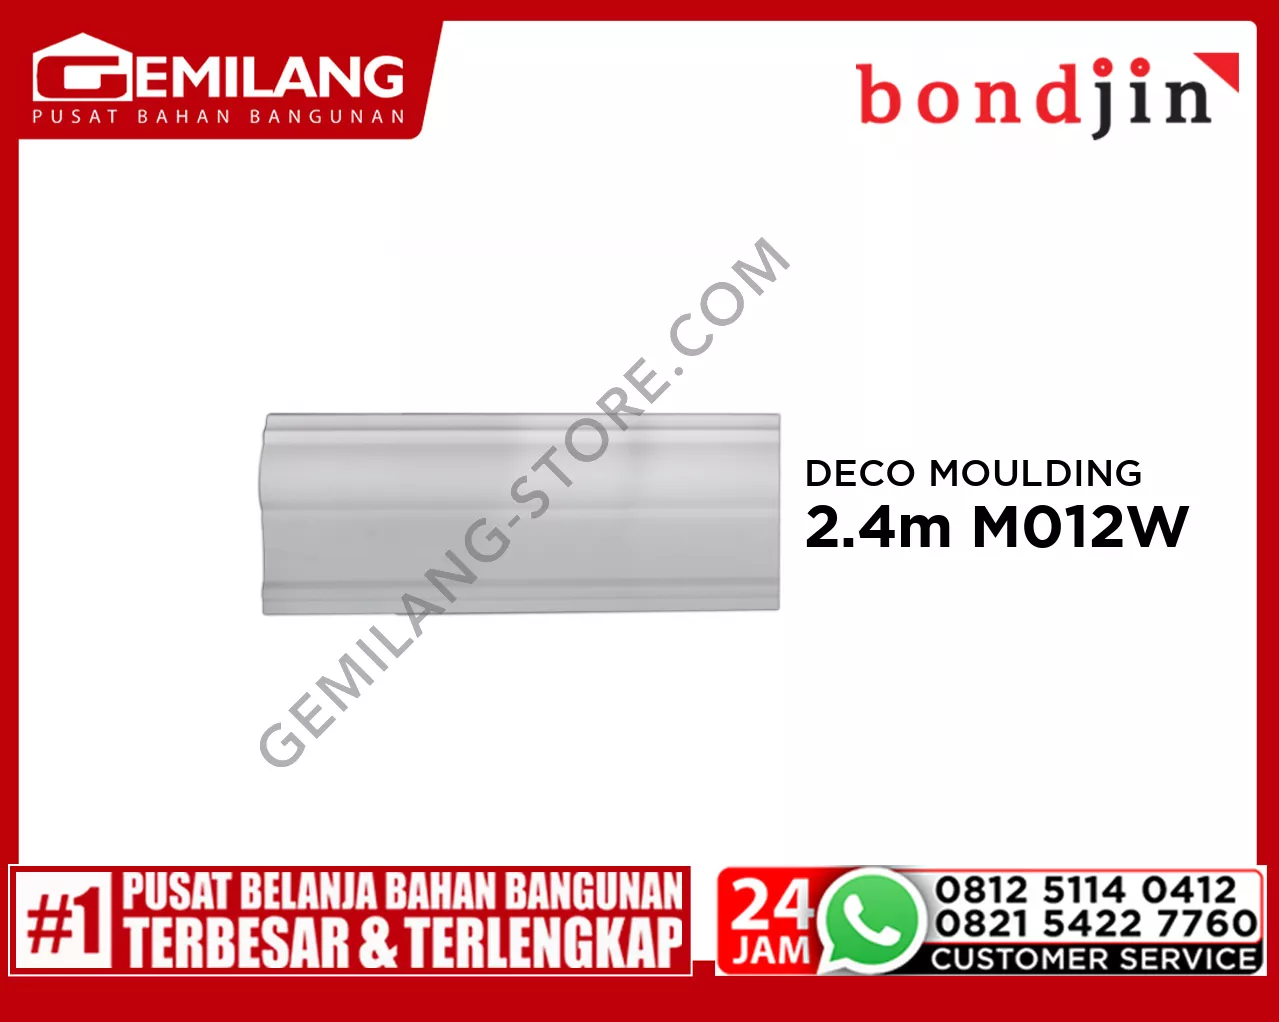 BONDJIN DOOR MOULDING 2.4M M012-W